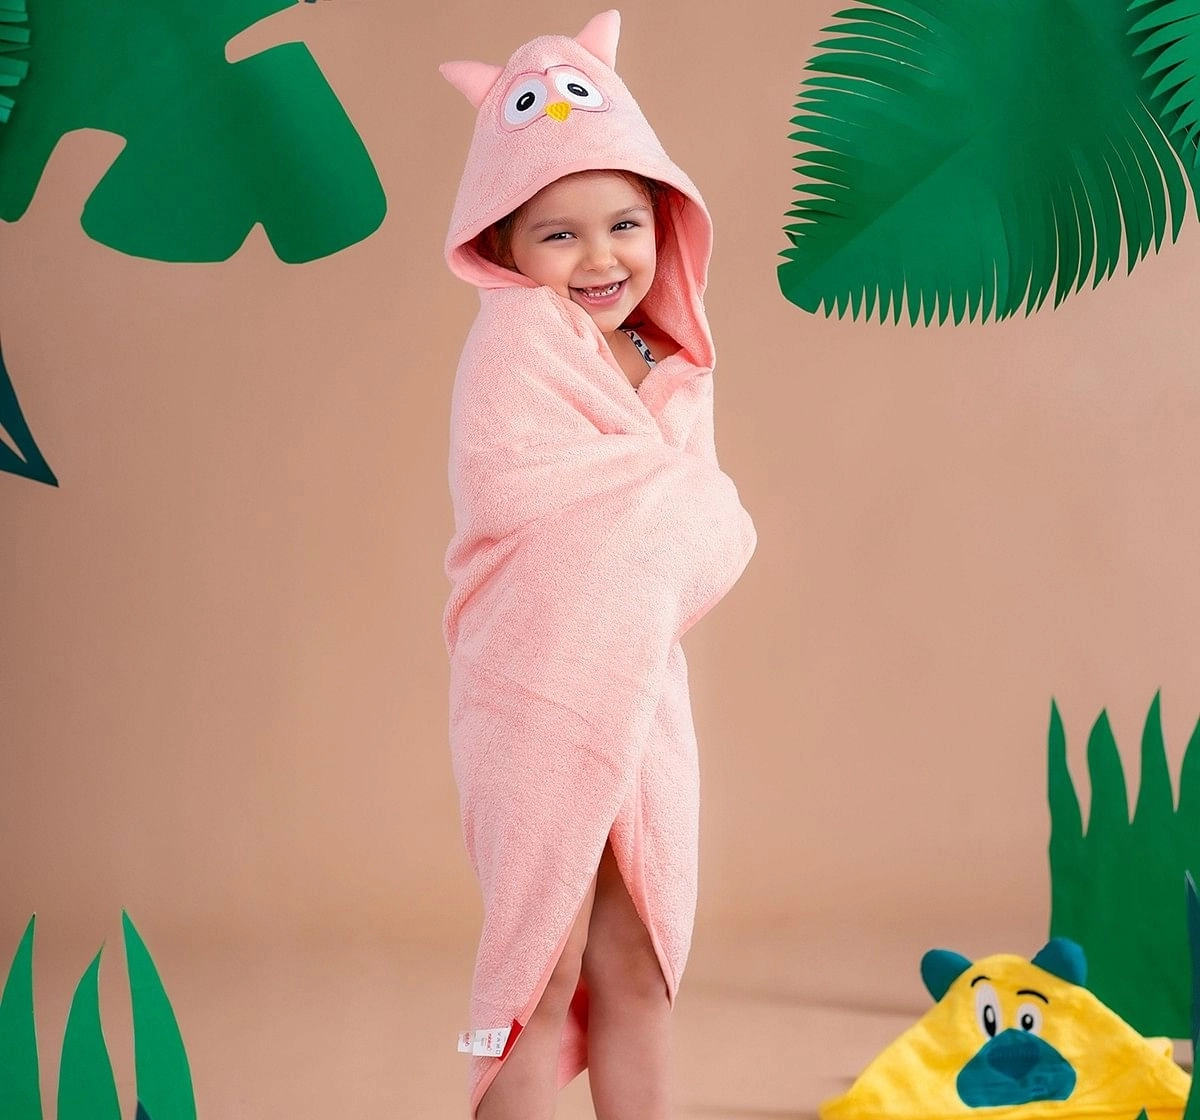 Rabitat Kids Hooded Bath Towel Super Soft Made with Zero Twist Cotton, Pink, Pink Owl, 5Y+